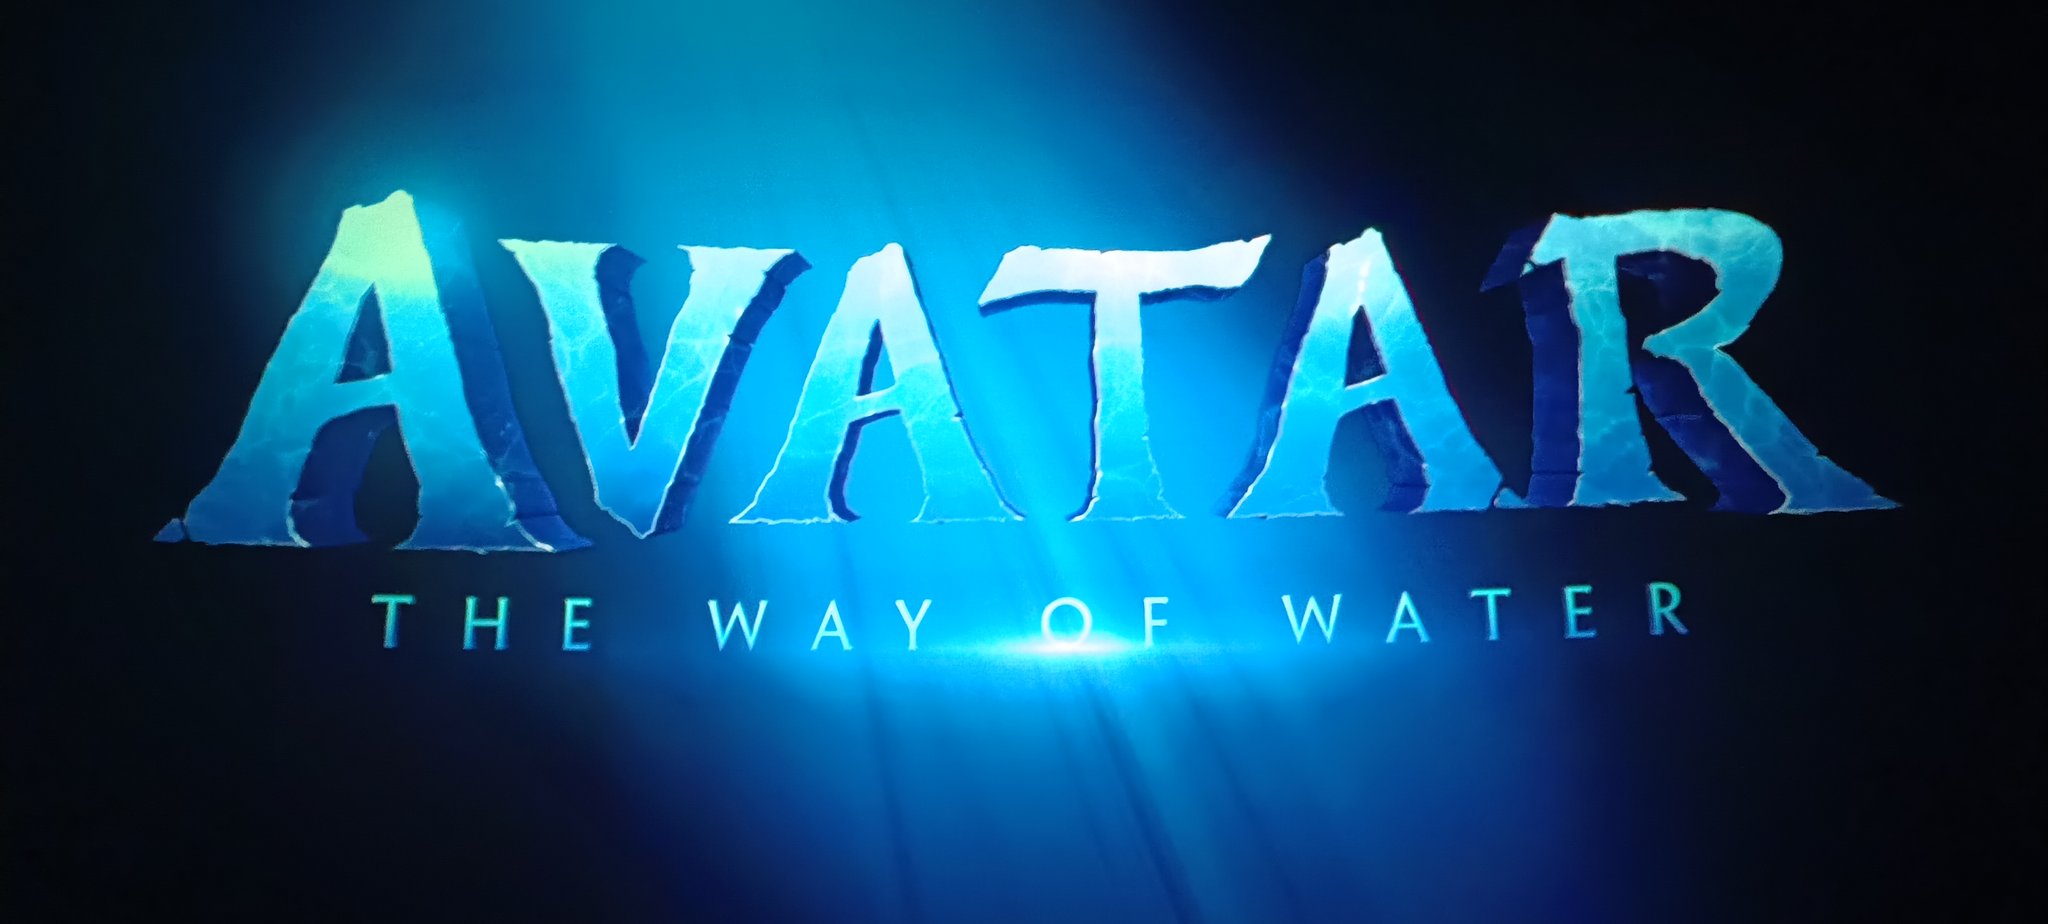 Avatar 2 starting title